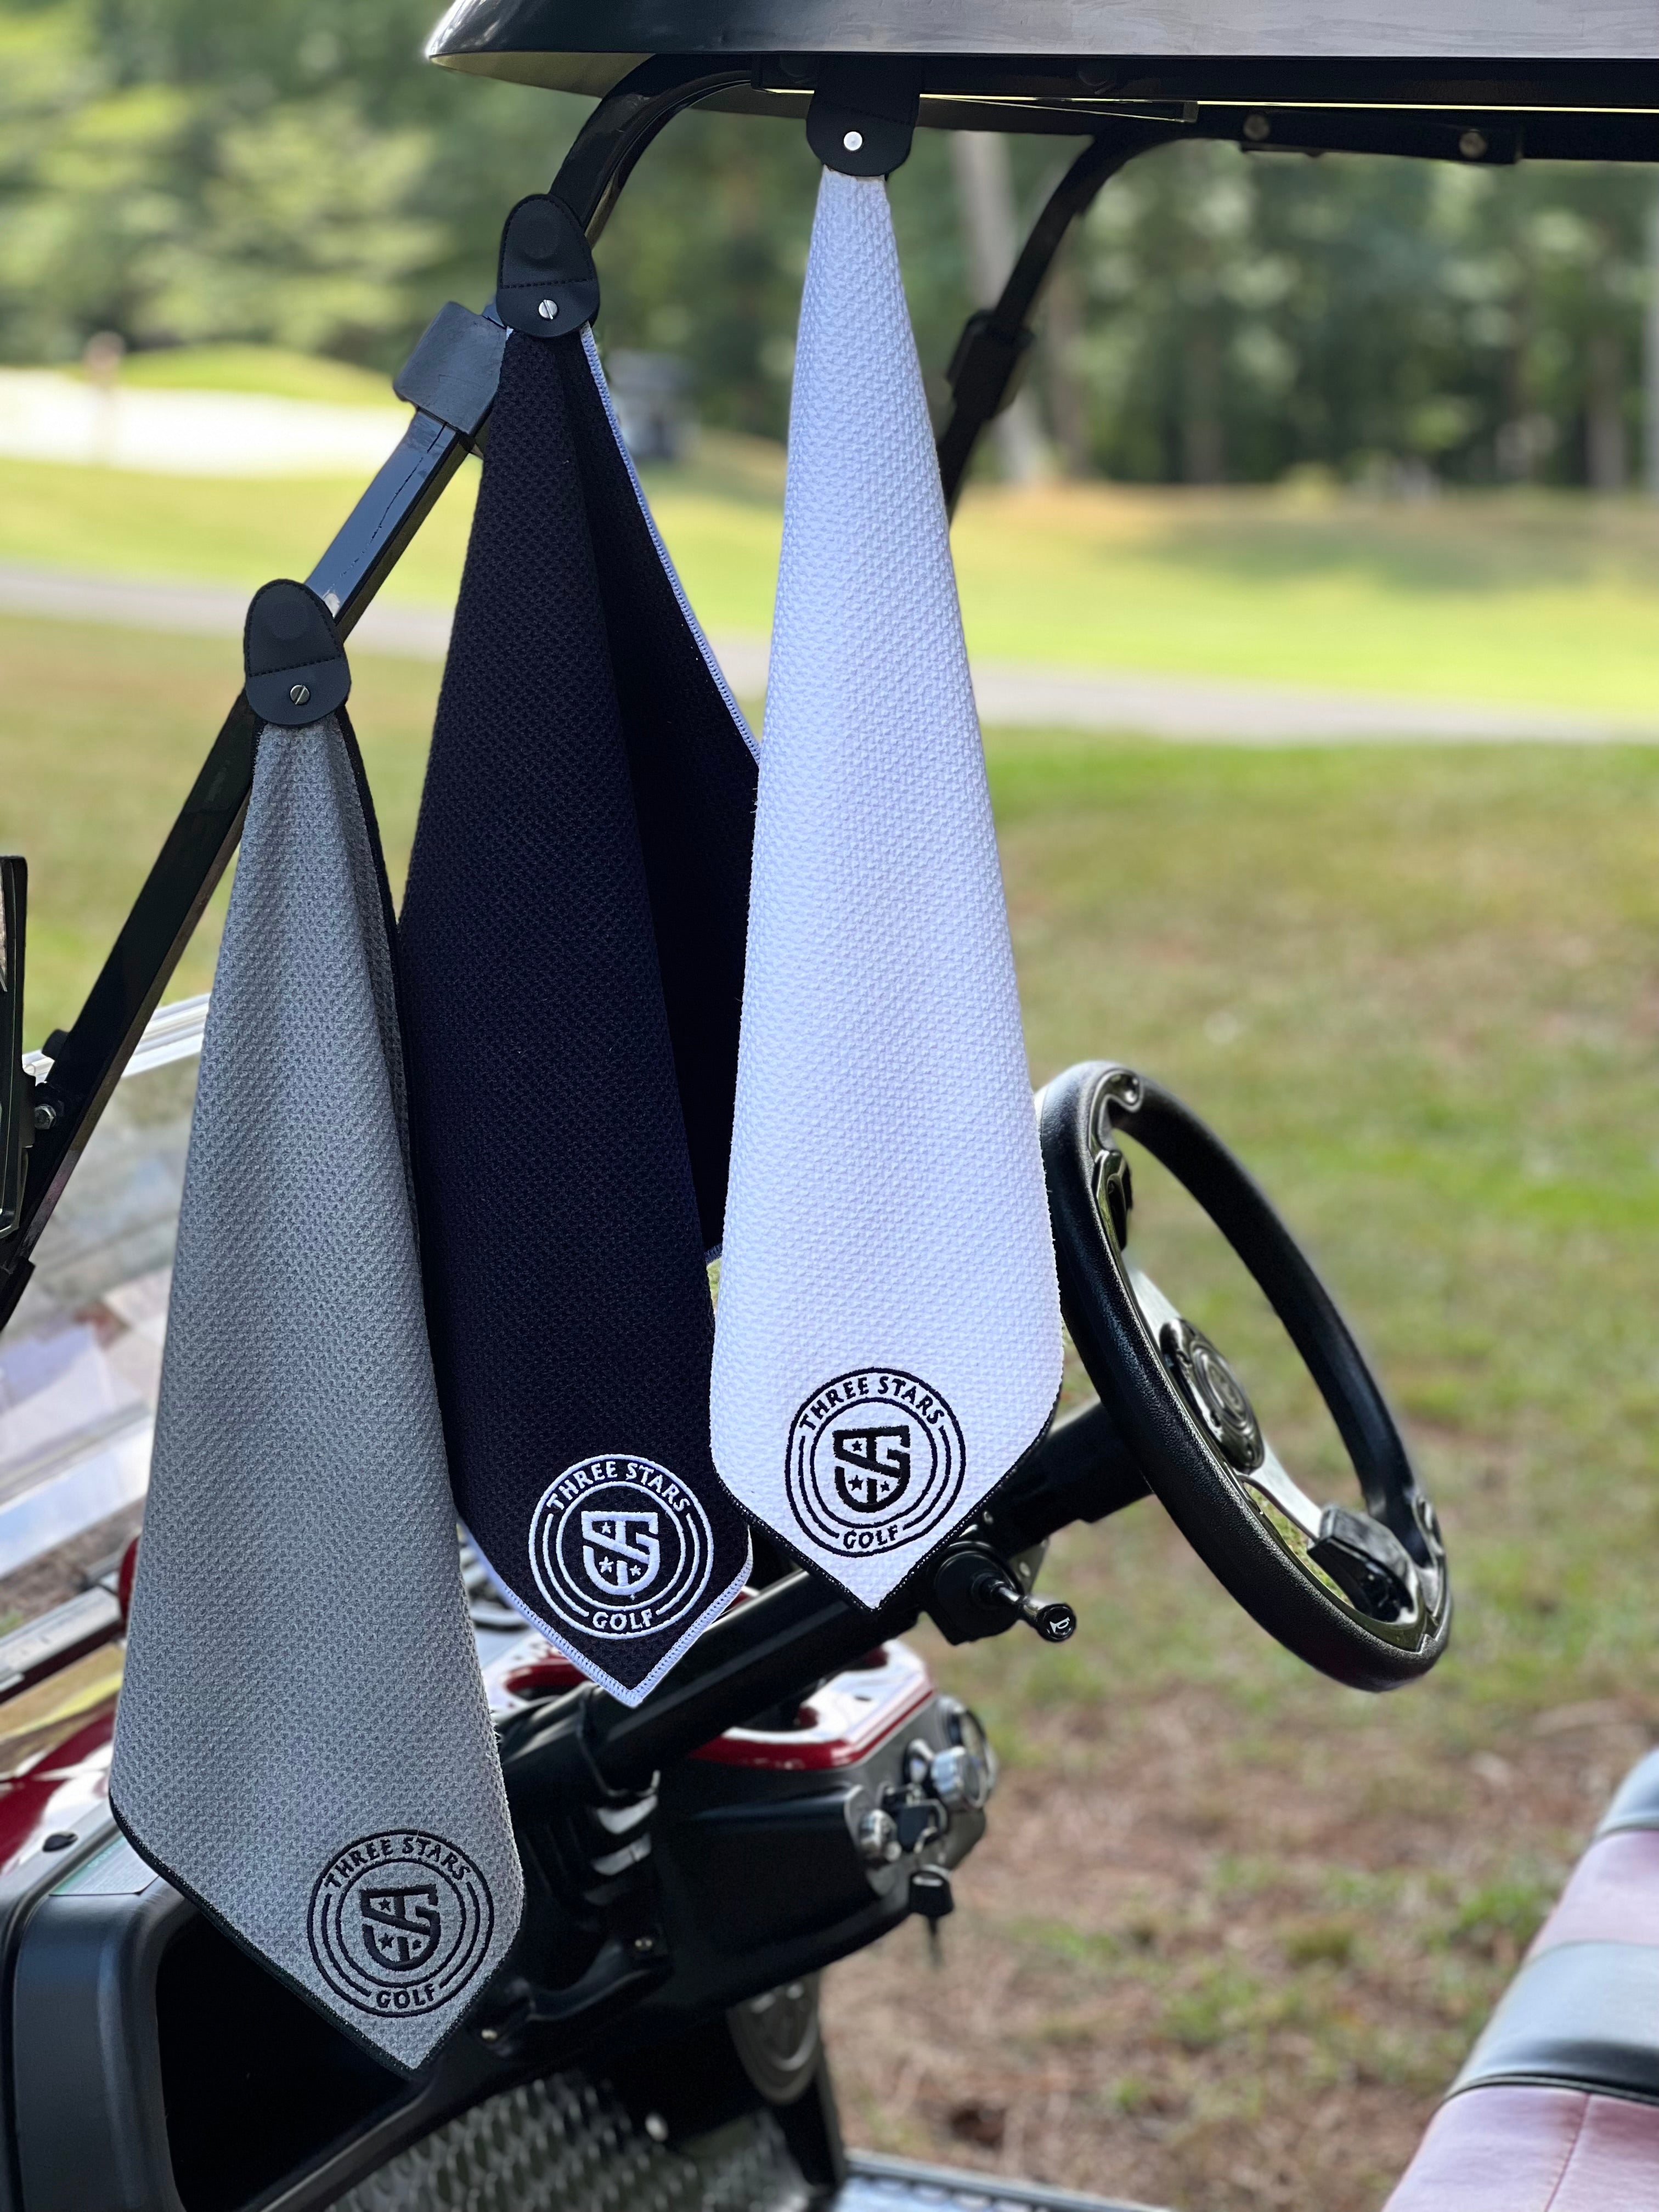 3SG Magnetic Towel - Black - Three Stars Golf